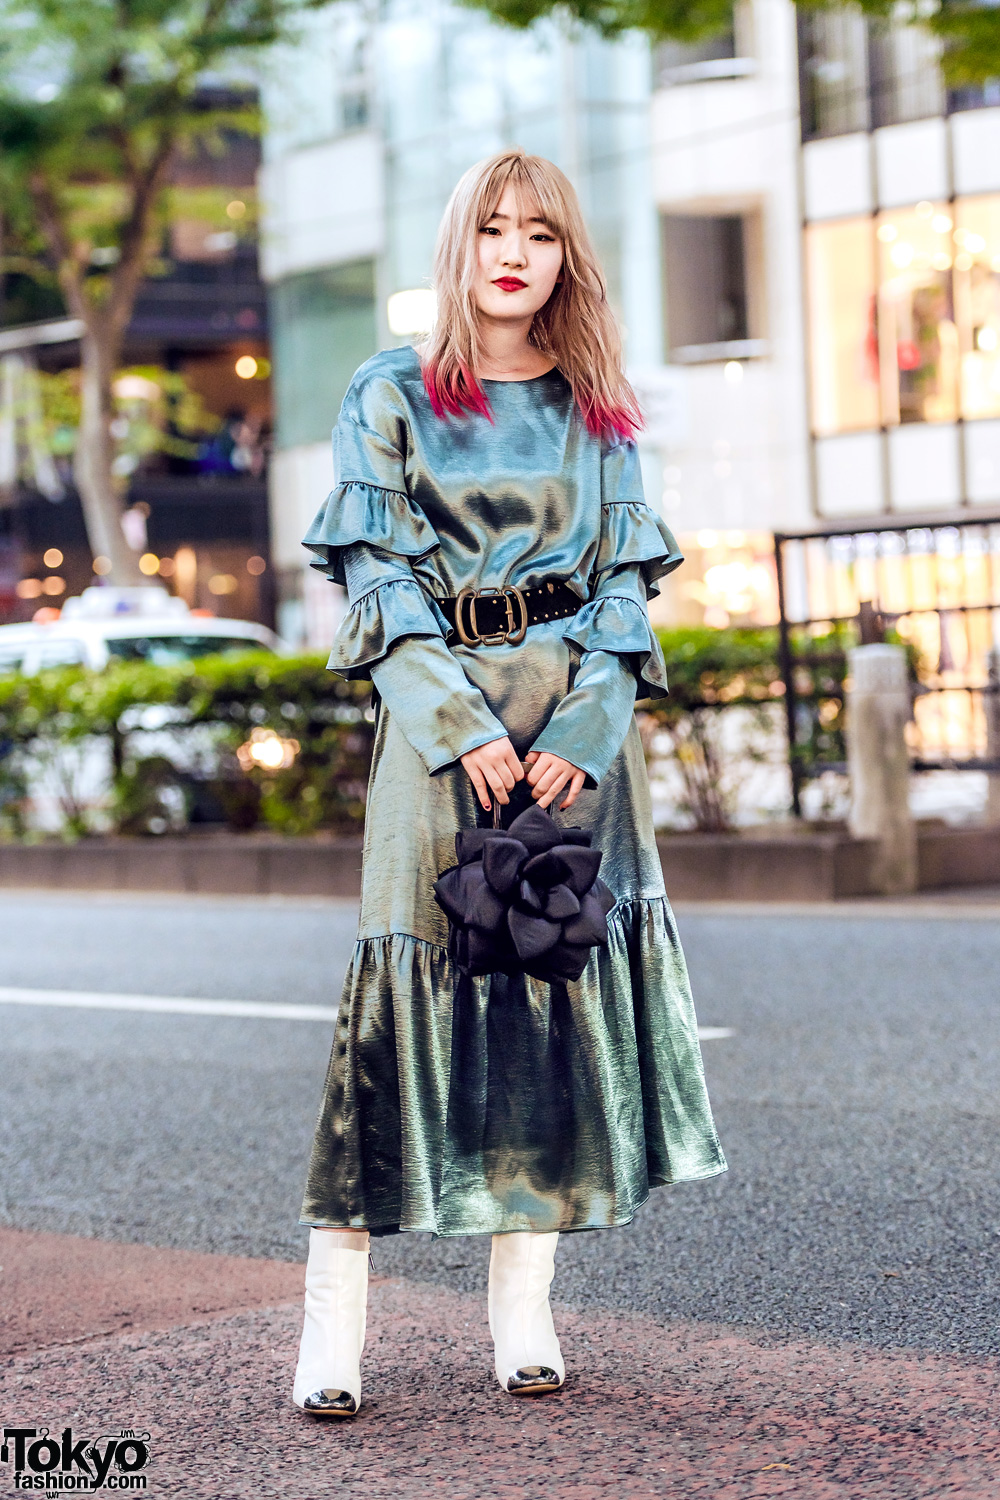 Japanese Fashion Designer Street Style w/ Red Hair Tips, lilLilly Ruffle Dress, Metal Tip Boots & Vintage Flower Petal Handbag